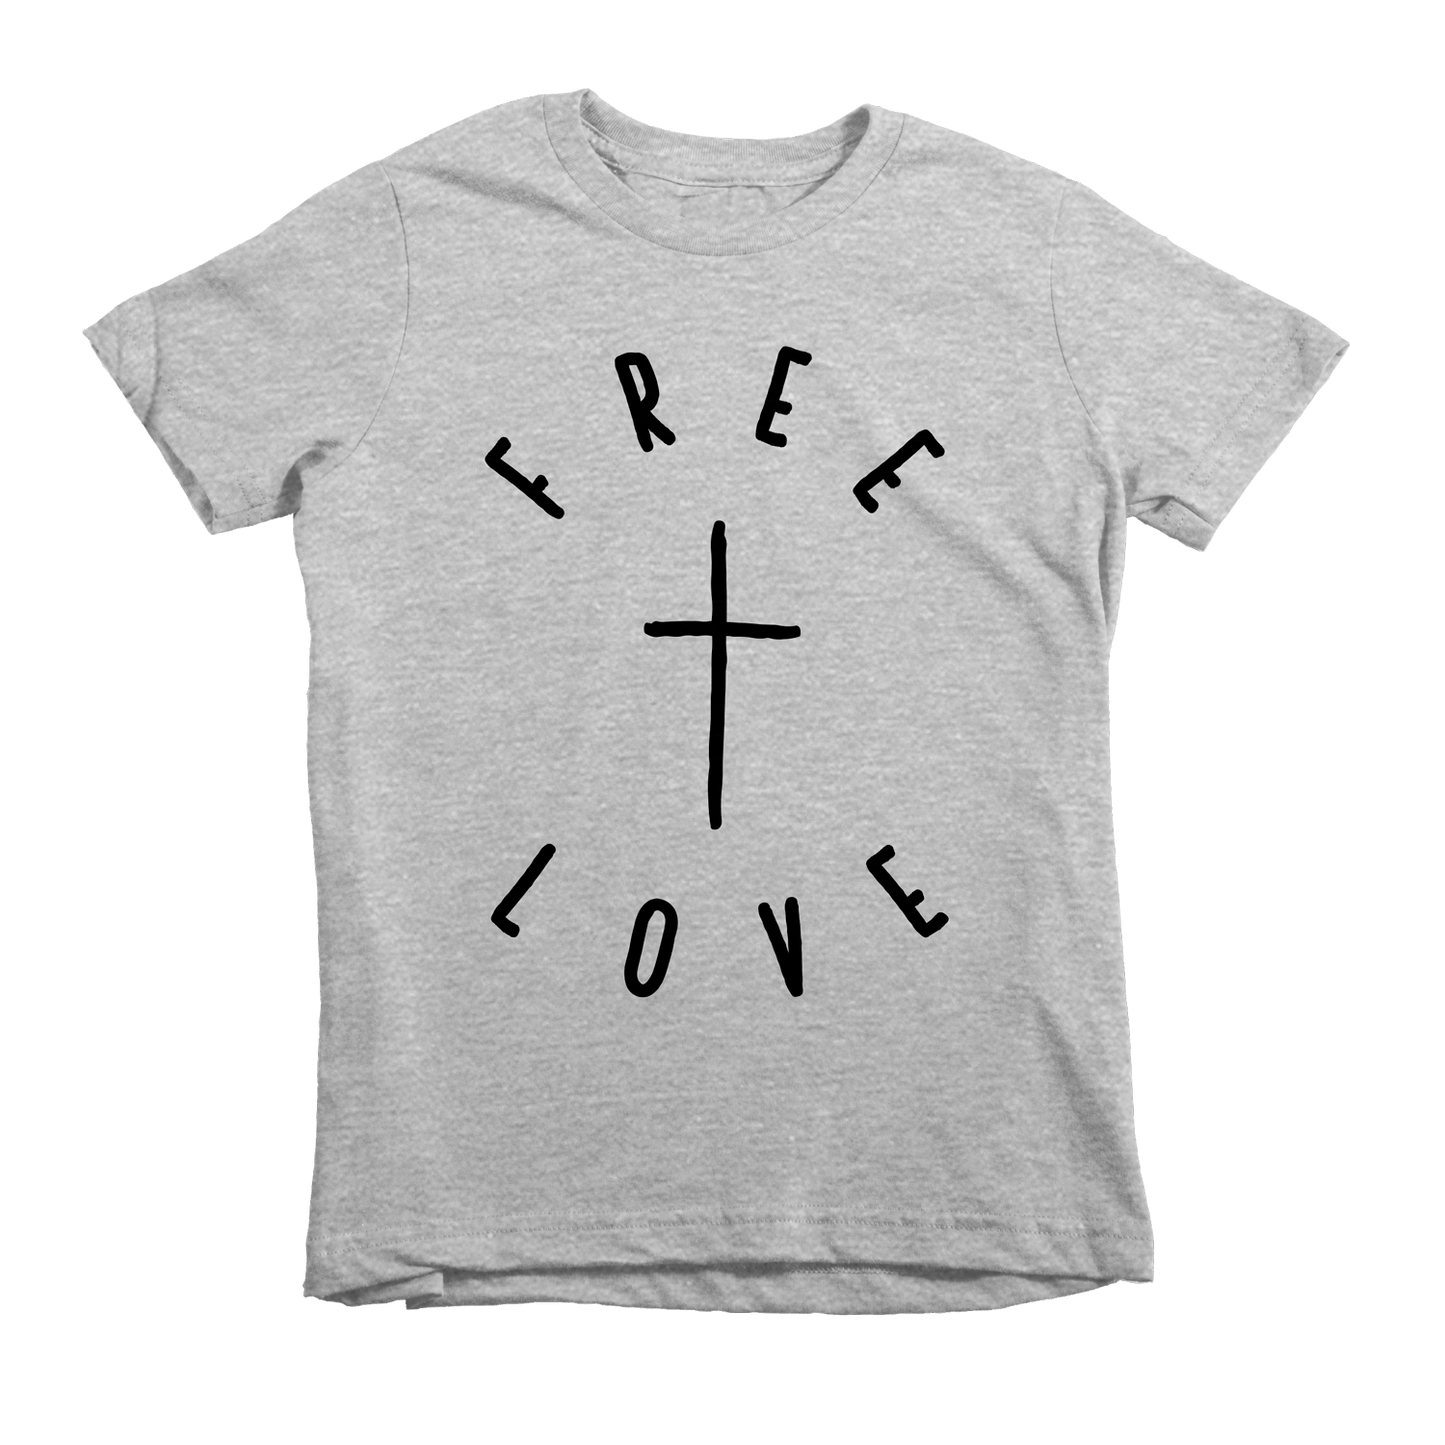 Free Love Tee - Beacon Threads - 2T / Grey w/ Black Lettering - 2